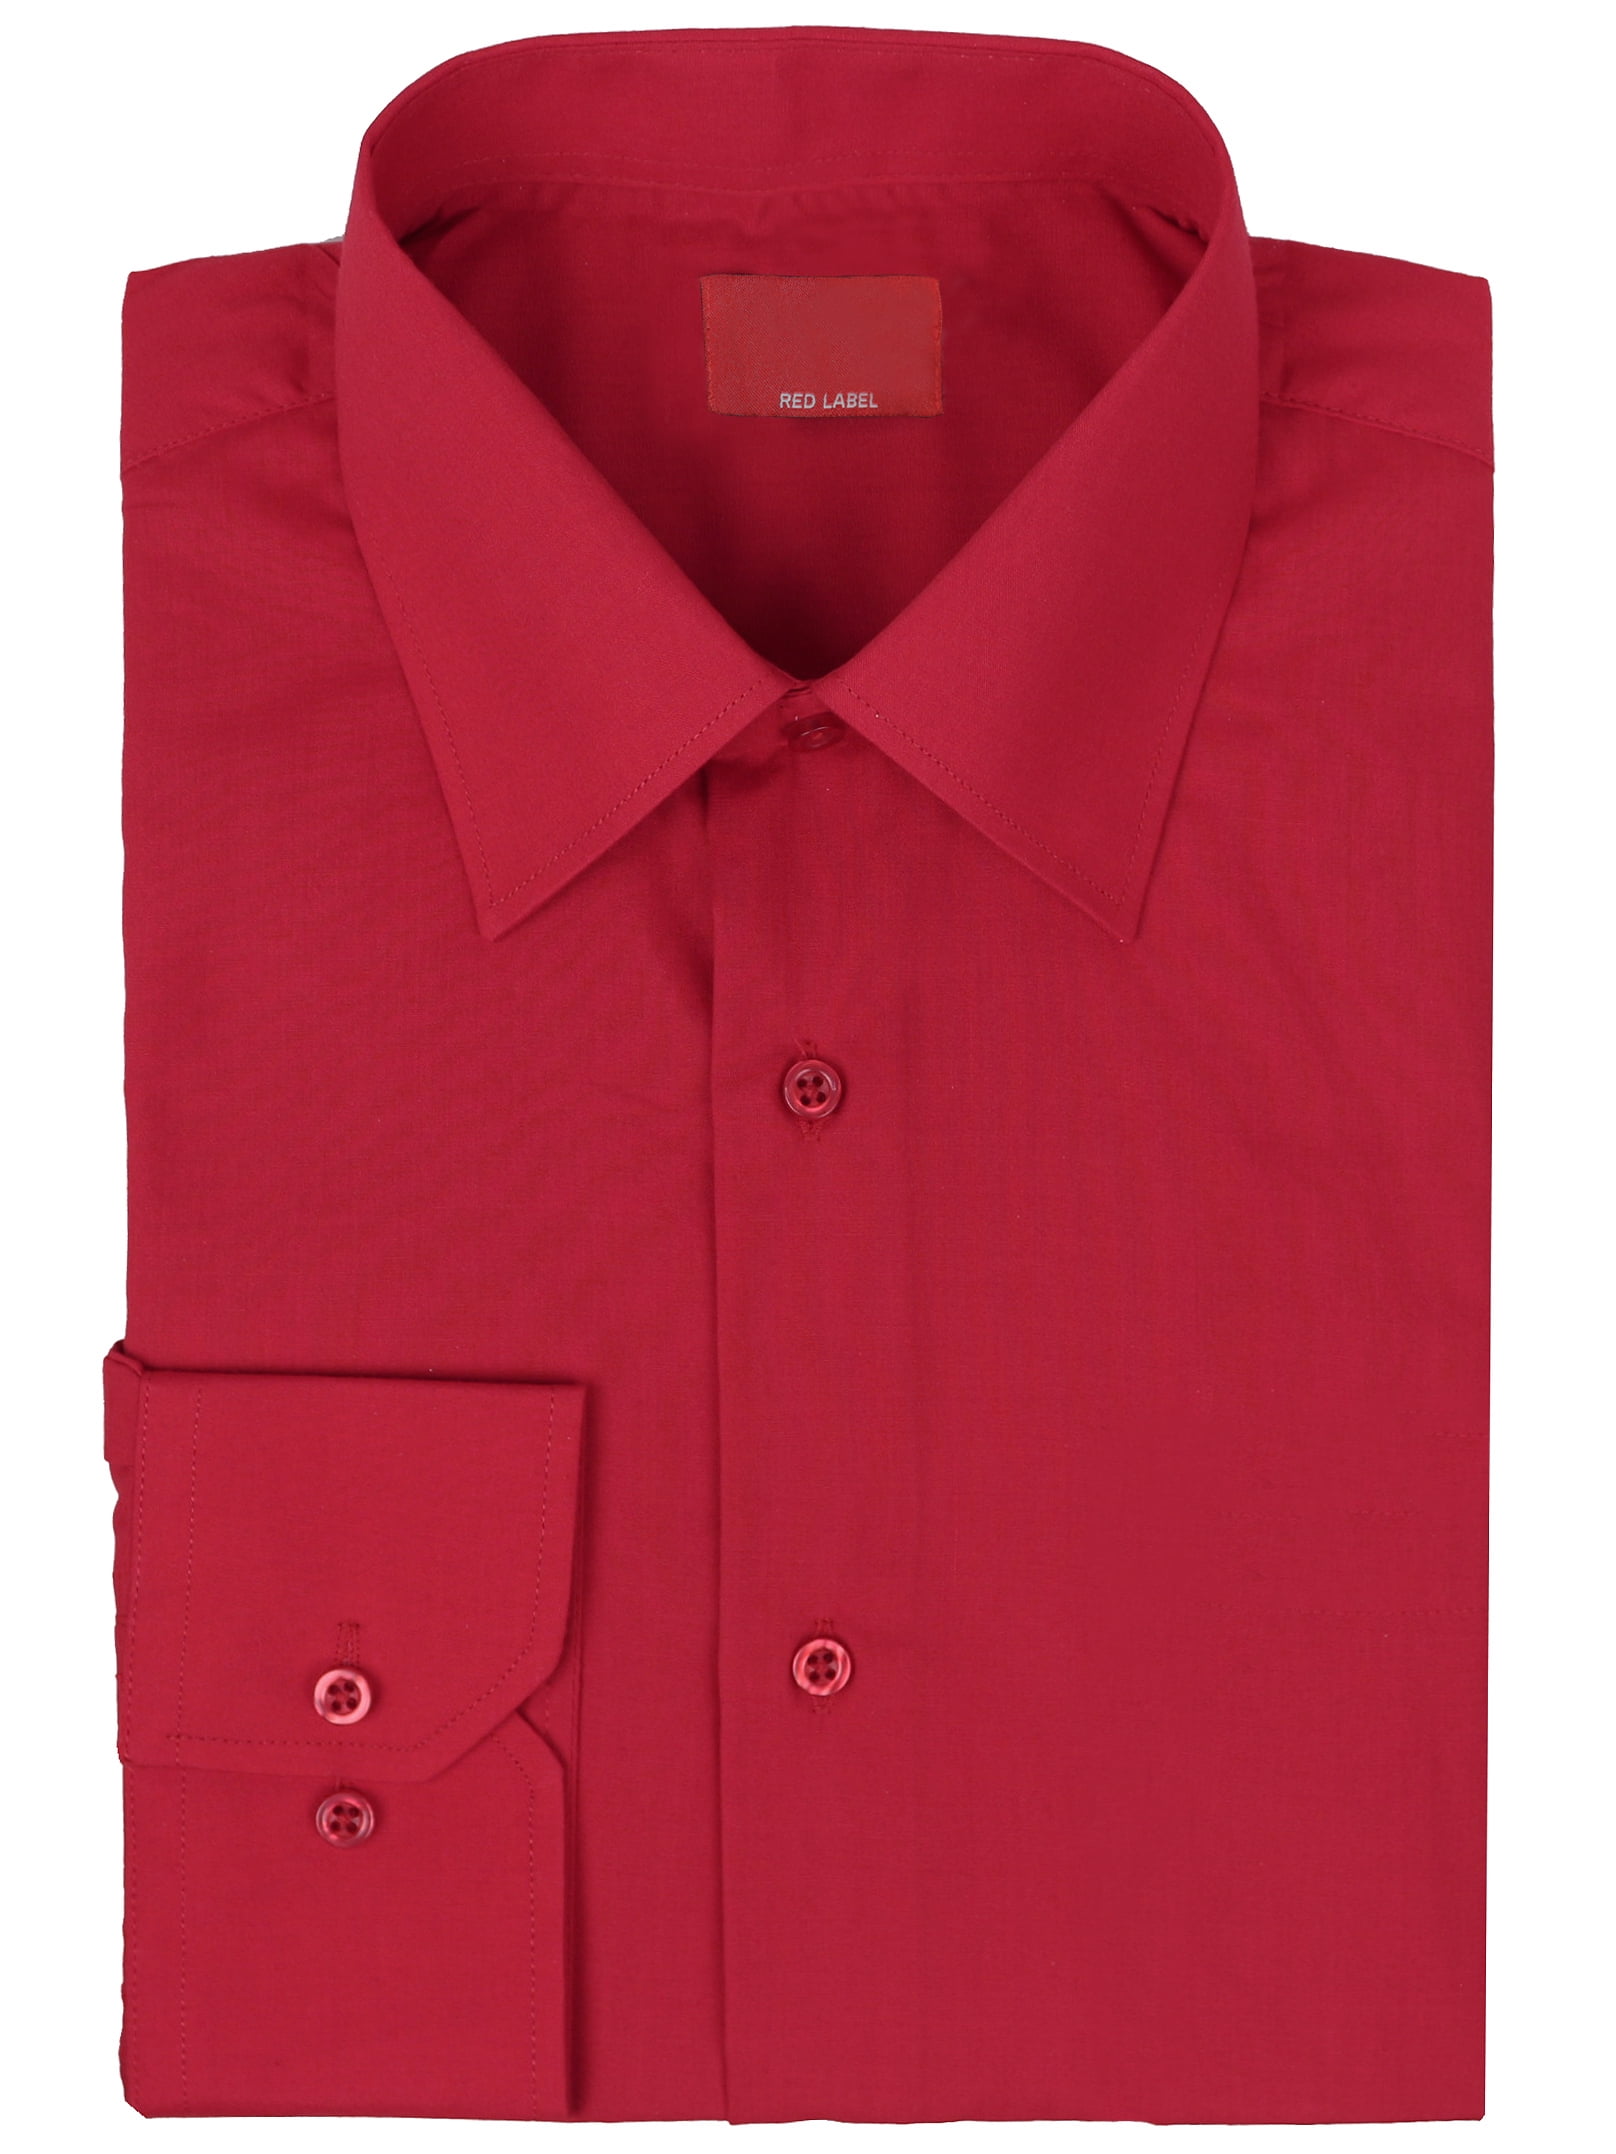 VKWEAR - Red Label Men's Long Sleeve Slim Dress Shirt D-10 (Red, XL ...